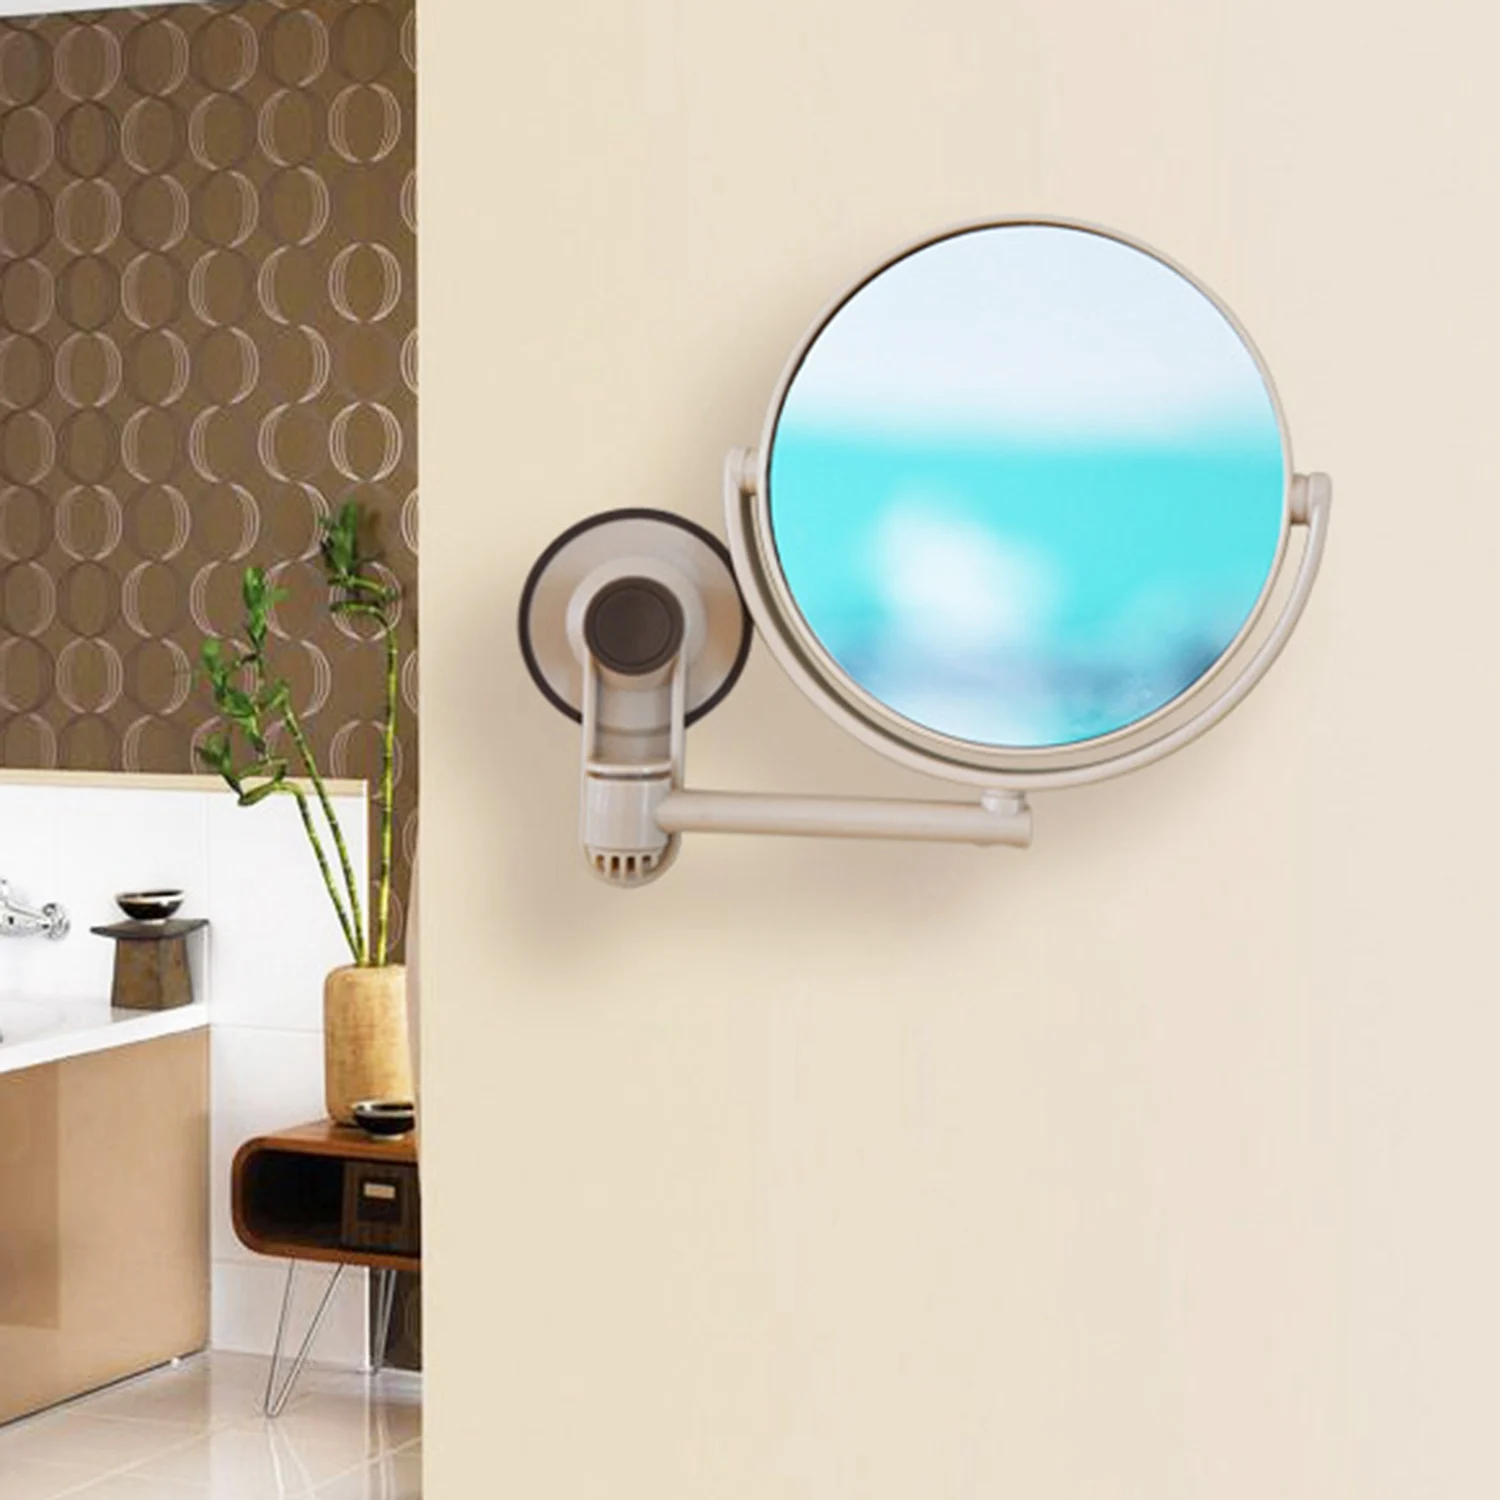 

Bath Mirror Cosmetic Mirror 1X/3X Magnification Suction Cup Adjustable Makeup Mirror Double-Sided Bathroom Mirror